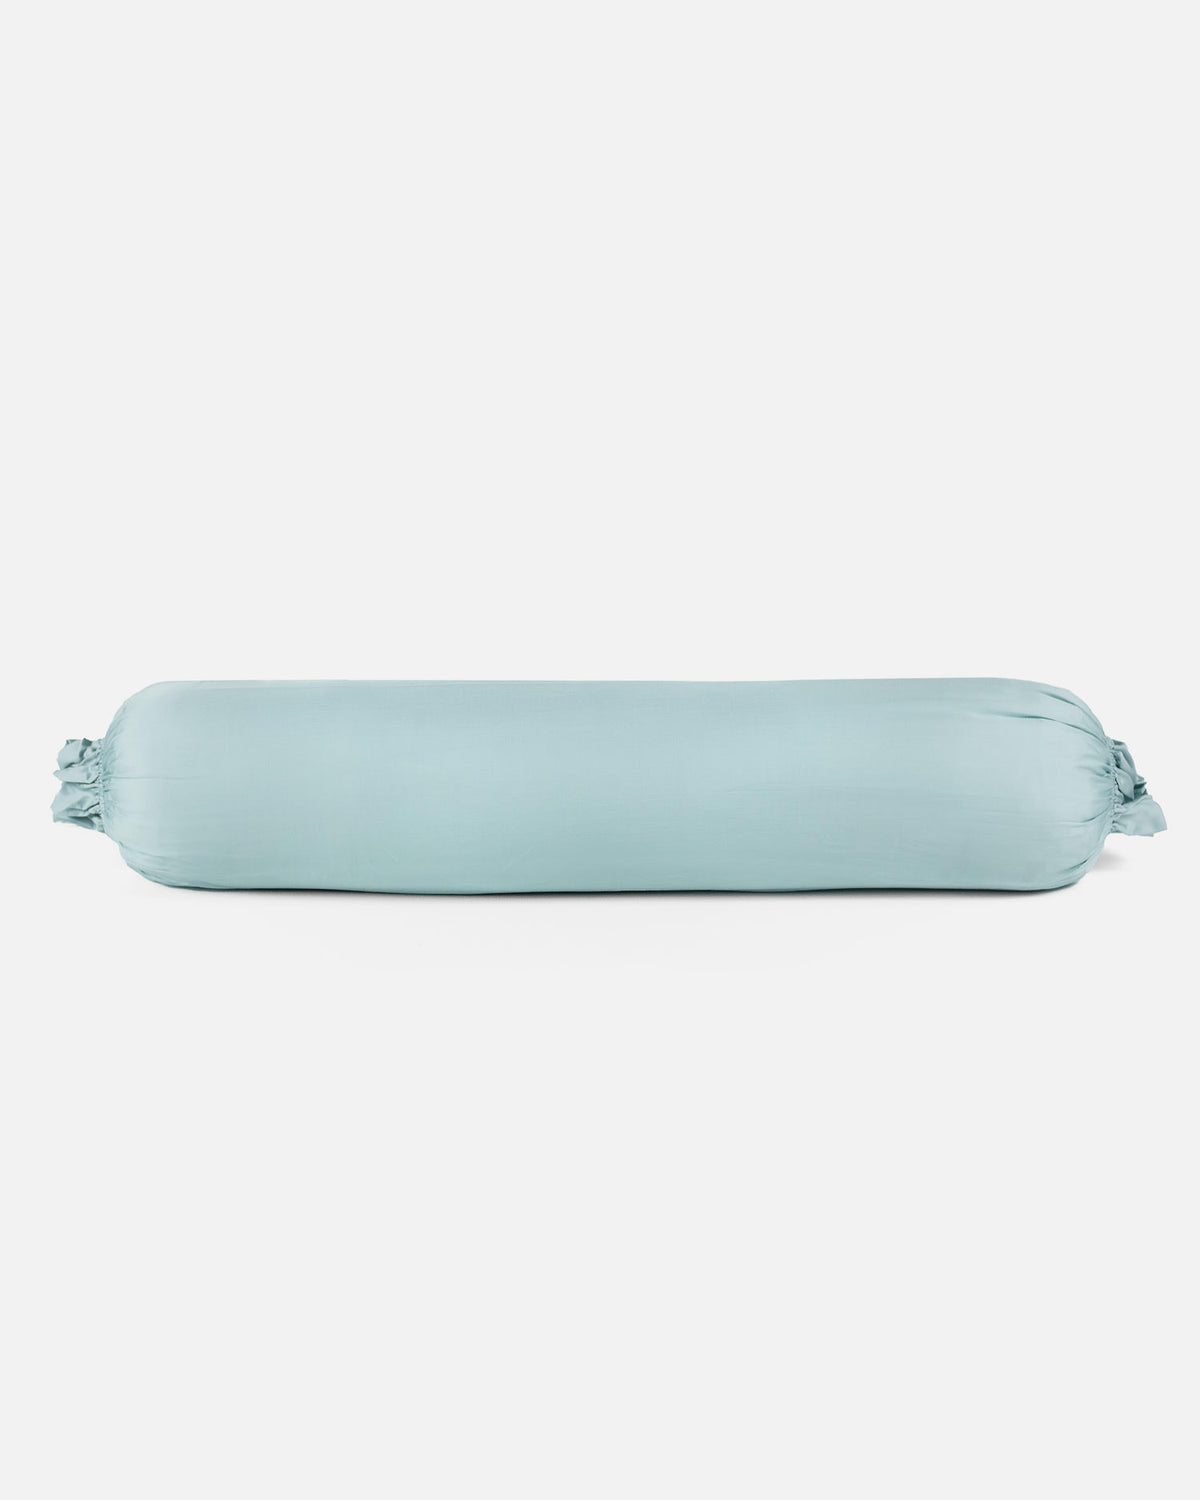 ava and ava ph organic bamboo lyocell bolster case / hotdog pillow / long pillow / po-tsim pillowcase in sky blue